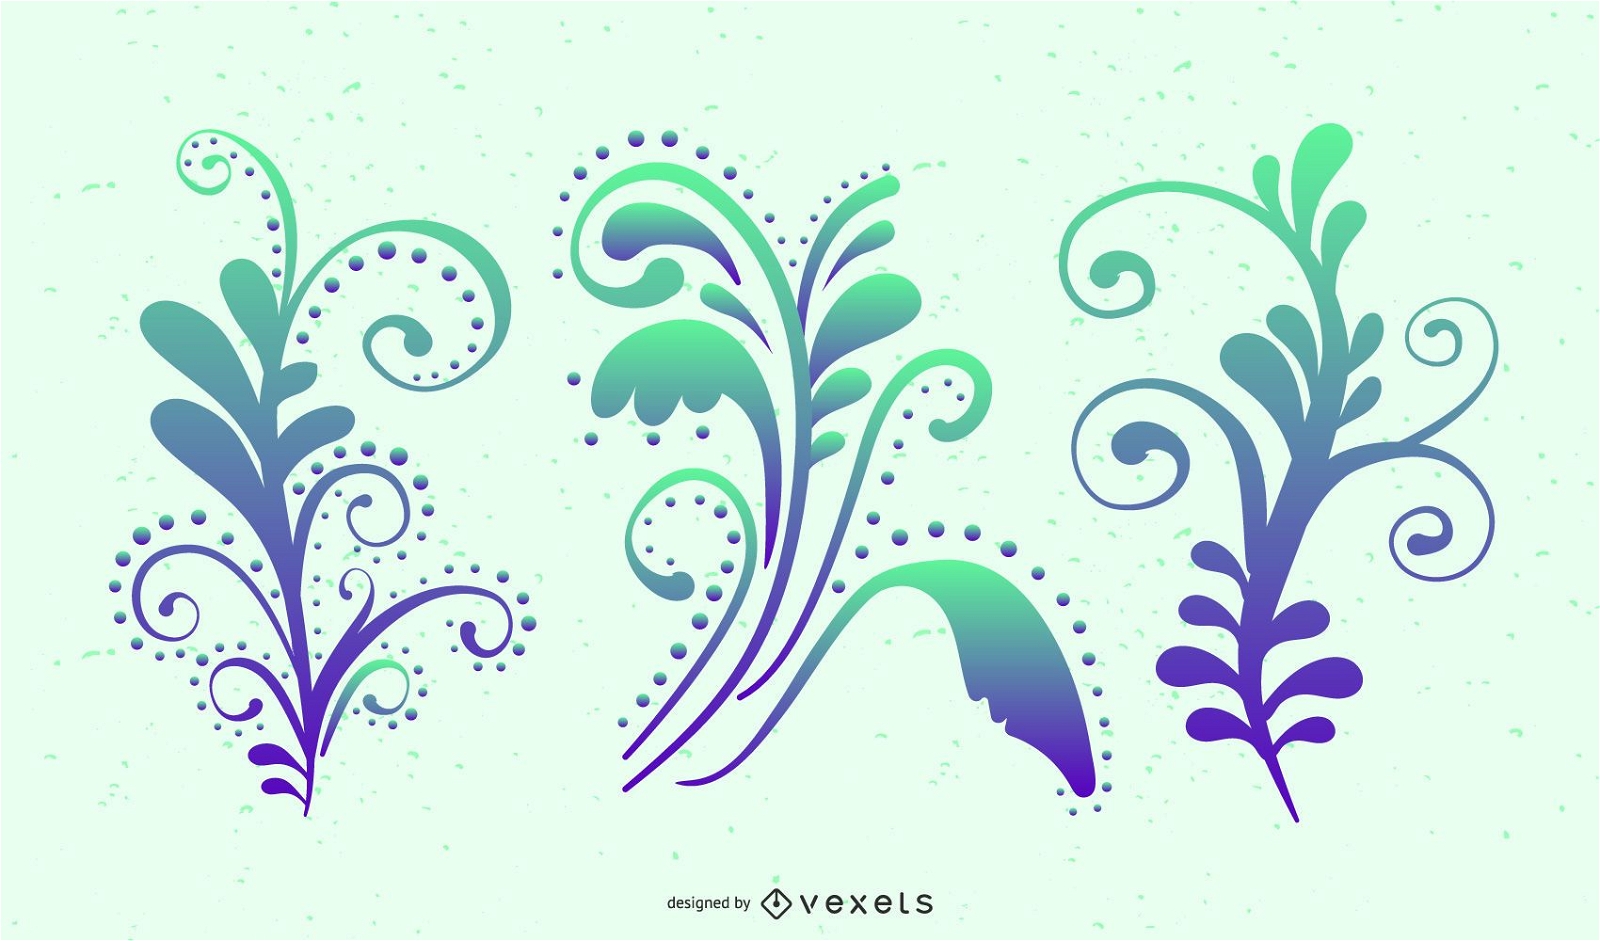 Colorful Swirls Vector Graphics